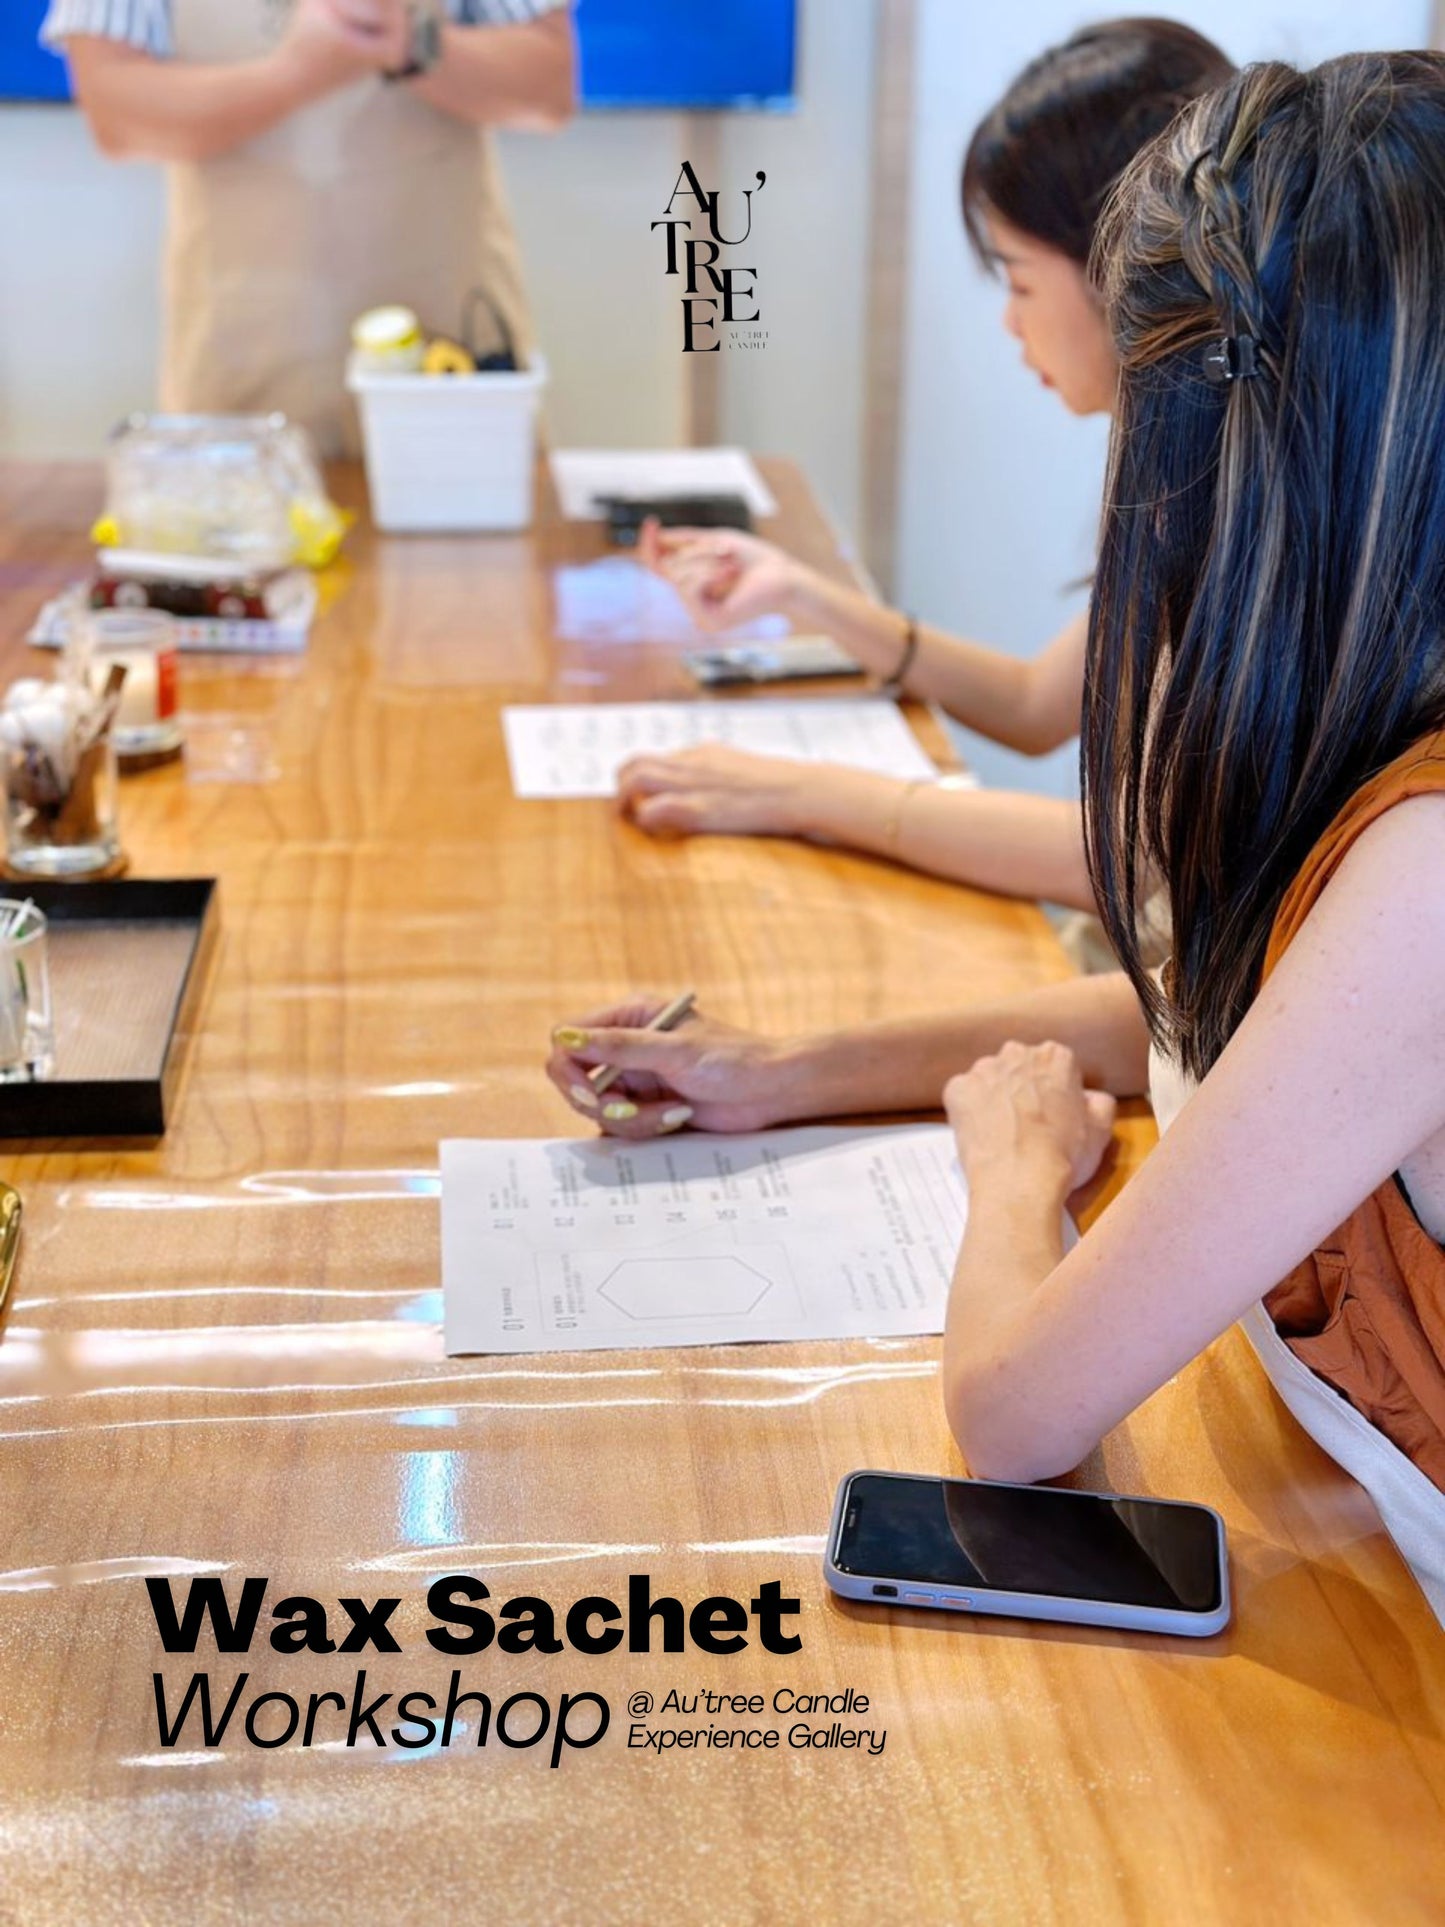 Wax Sachet Workshop